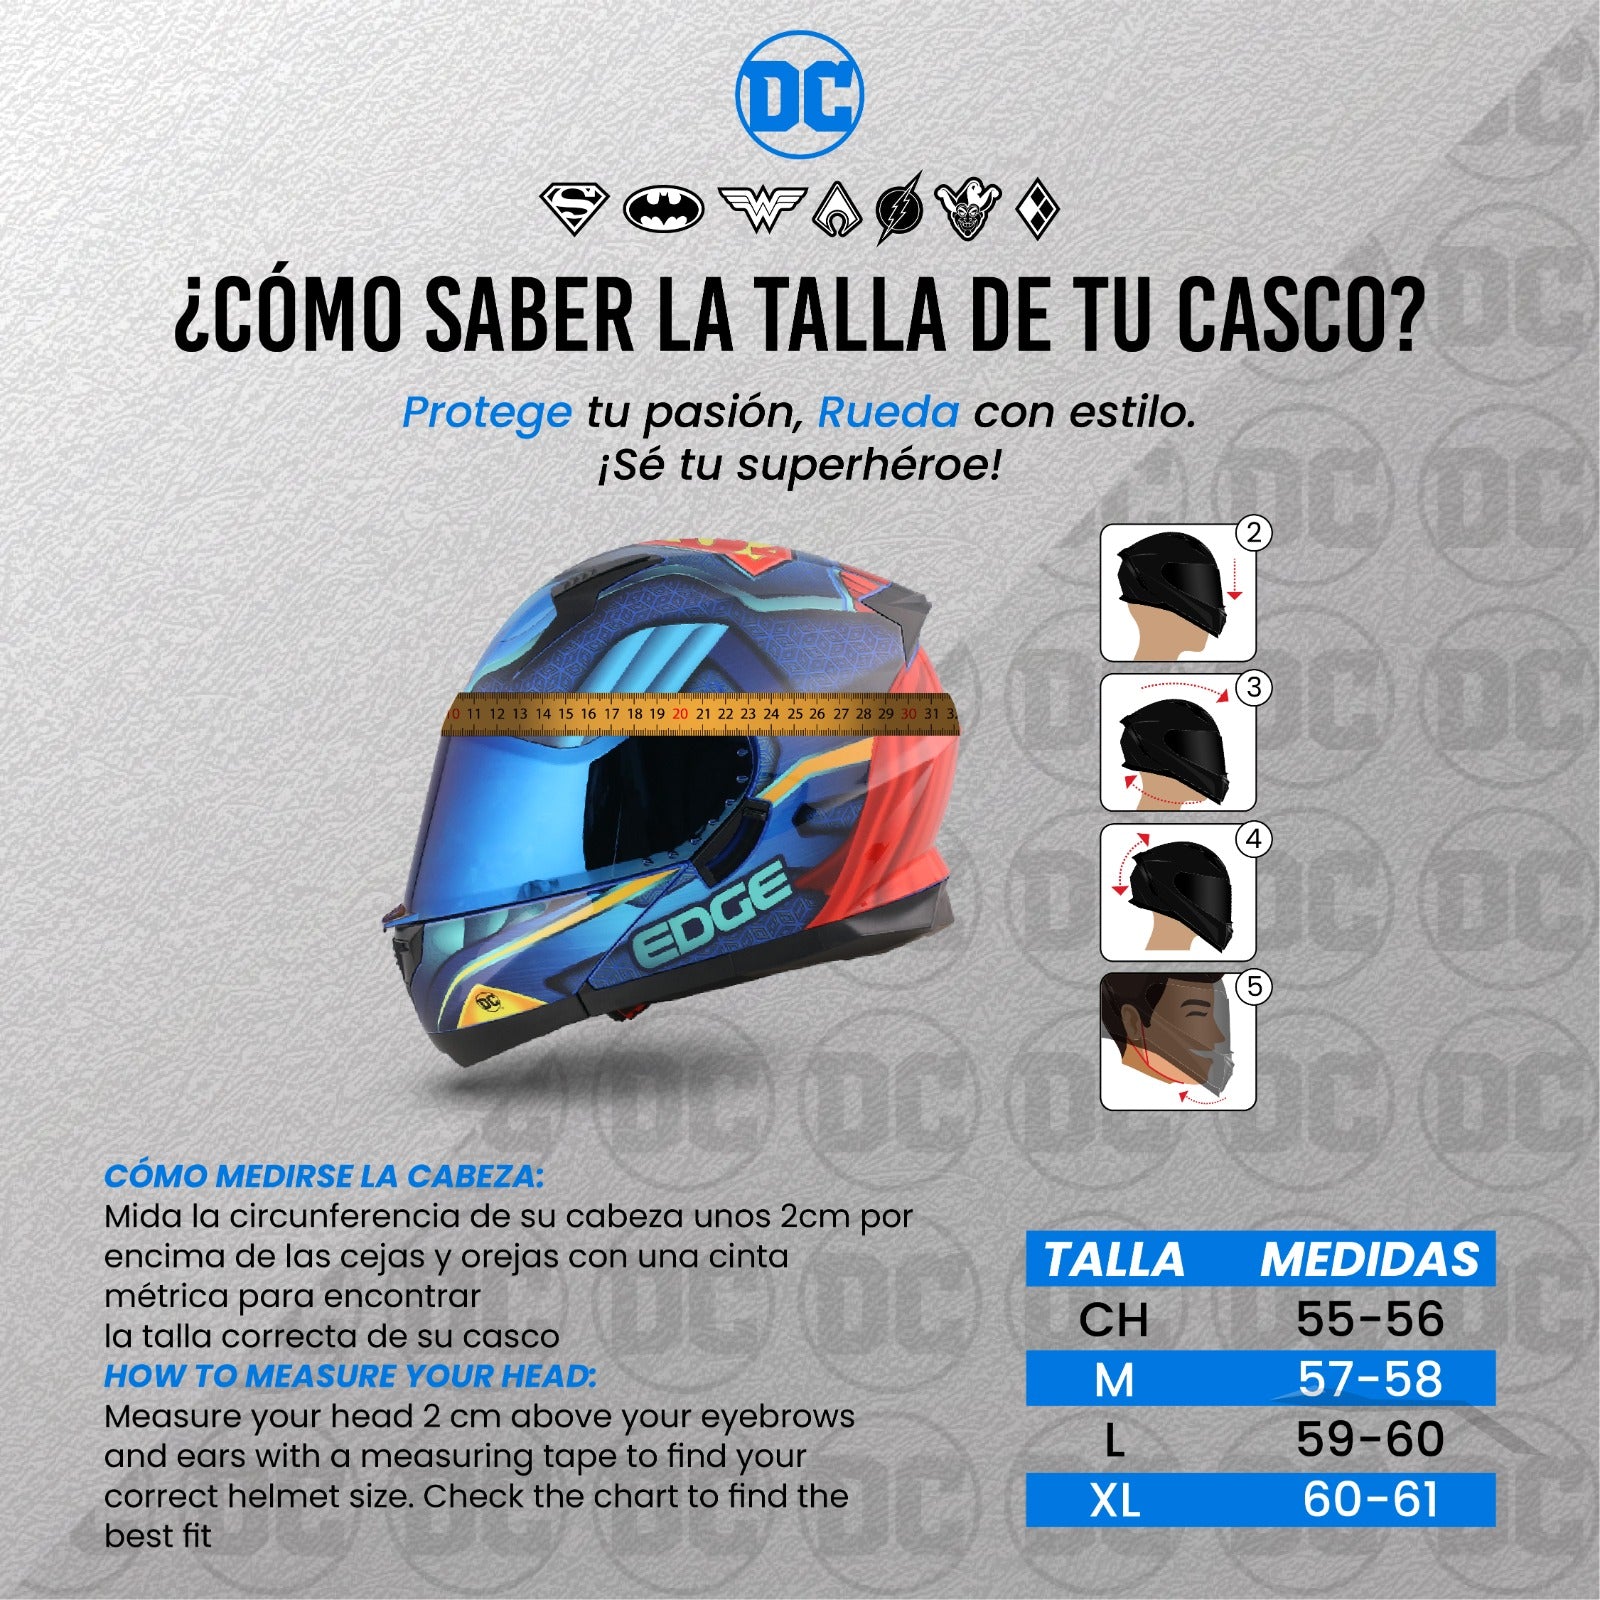 Casco Dc Integral Extreme Wonder Woman  Certificado Dot Y Ece 2206